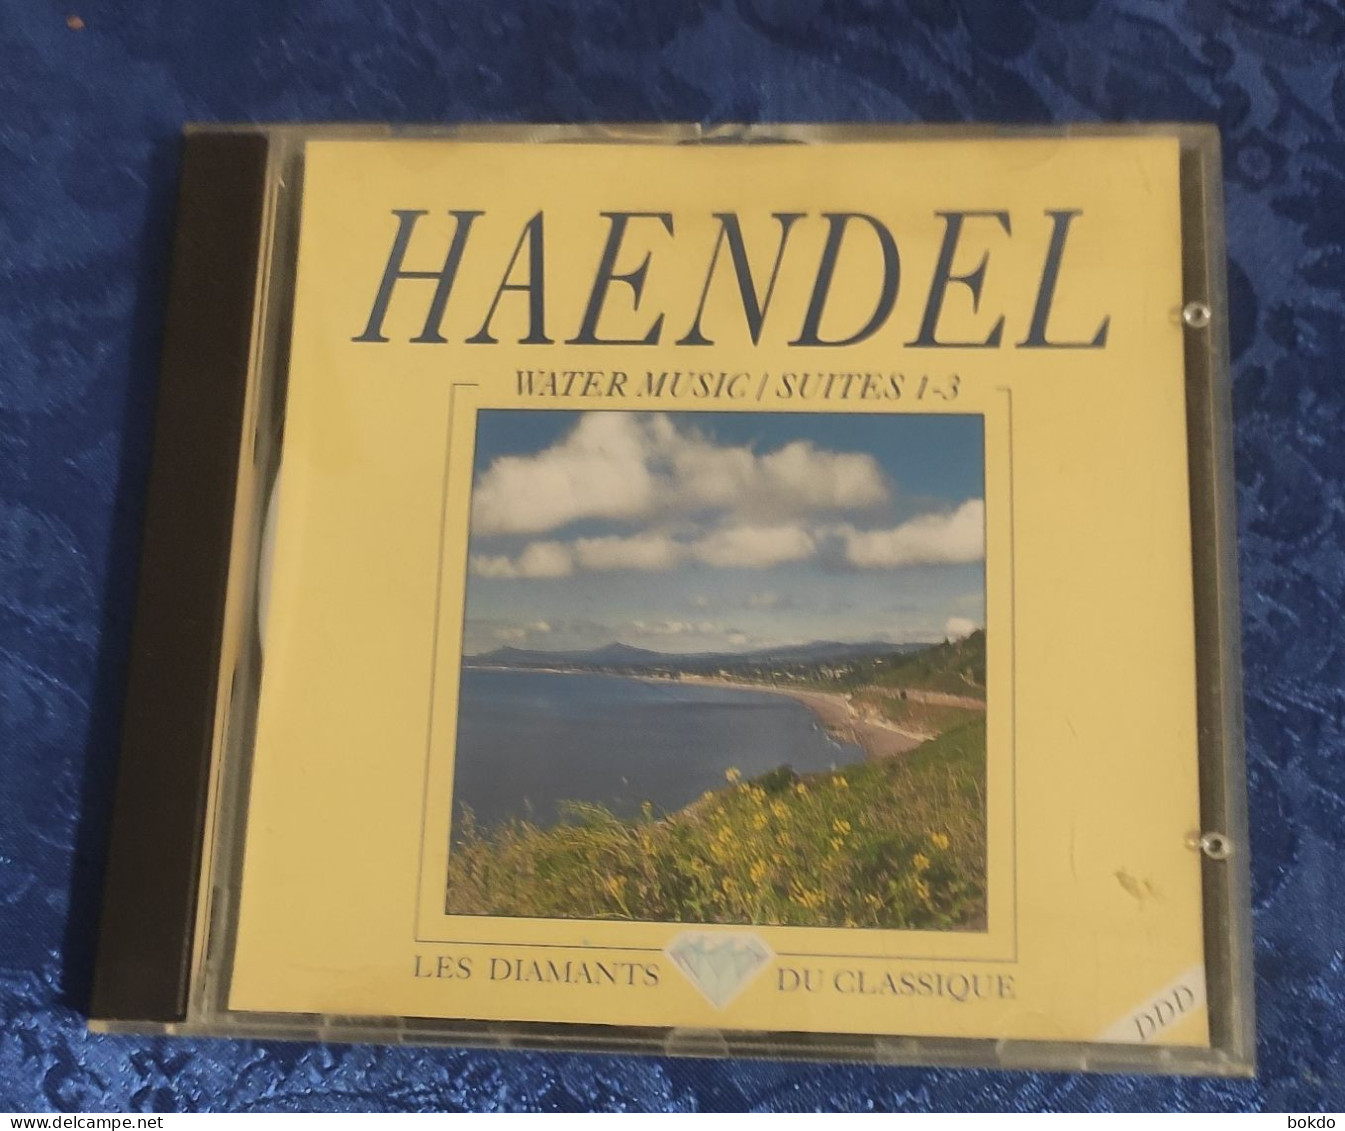 HEABDEL - Water Music Suites 1-3 - Classica